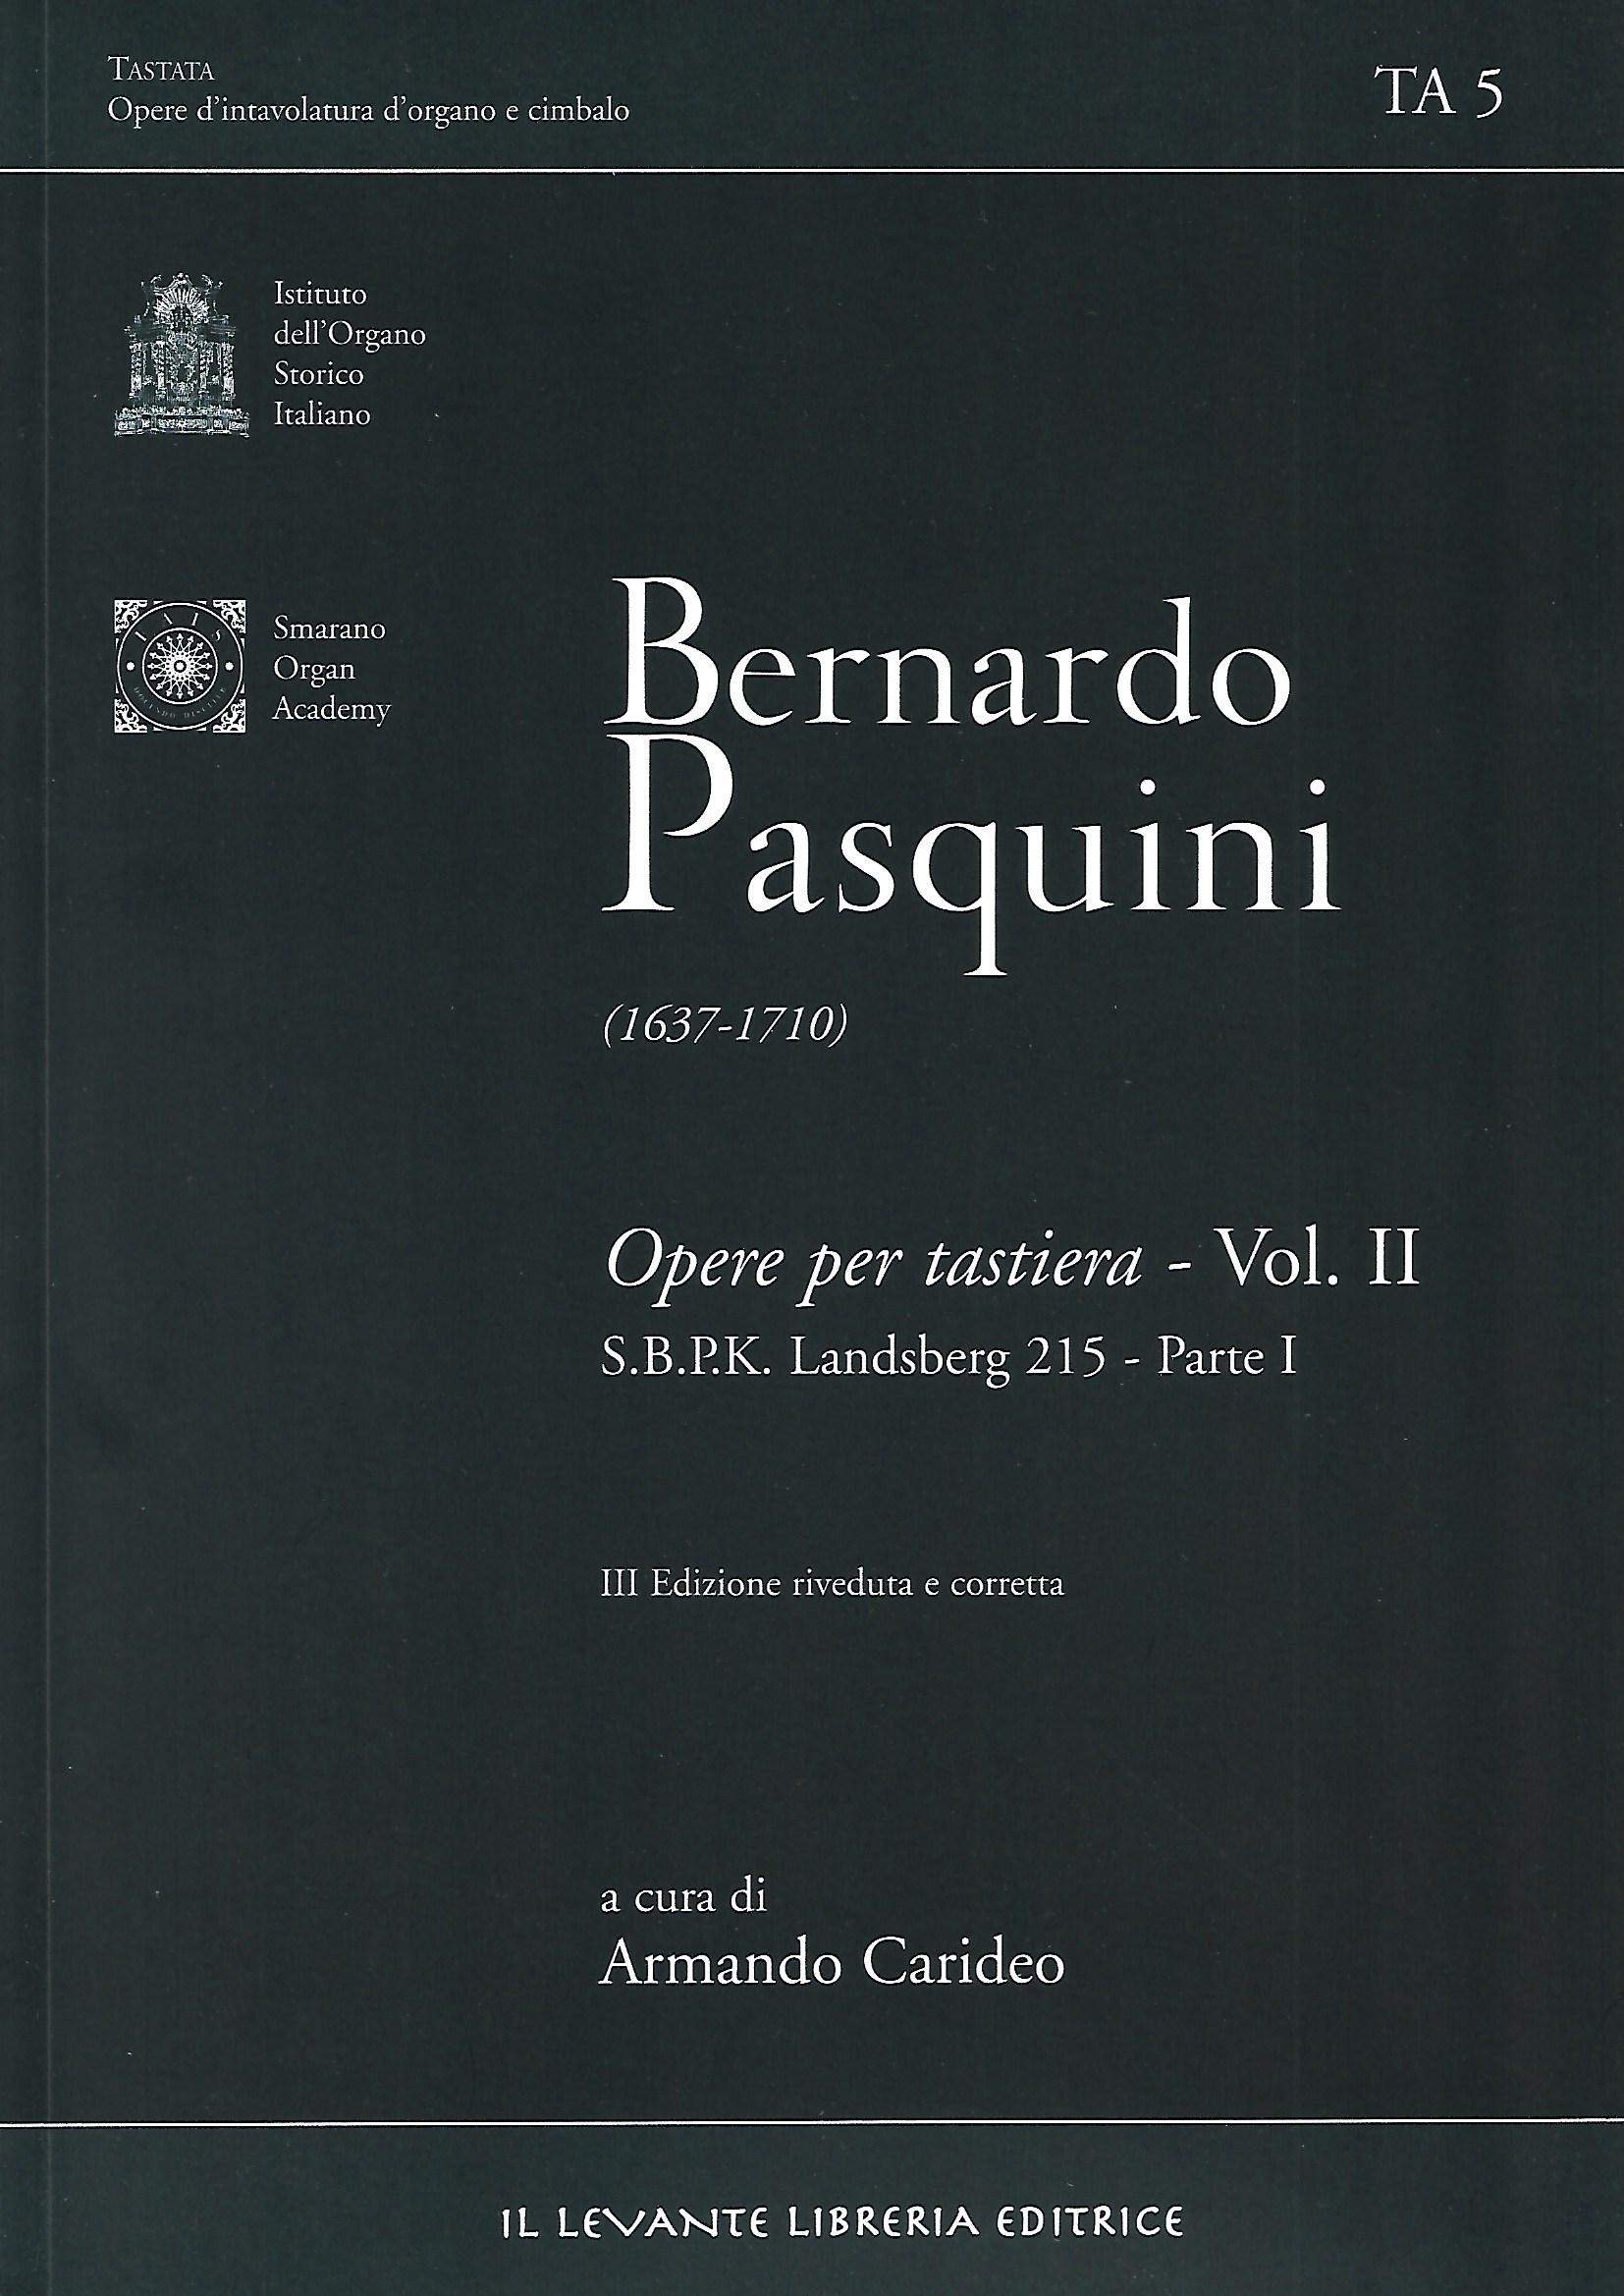 TA 5 Pasquini Bernardo - Opere per tastiera, Vol. II - S.B.p.K. Landsberg 215 - Parte I